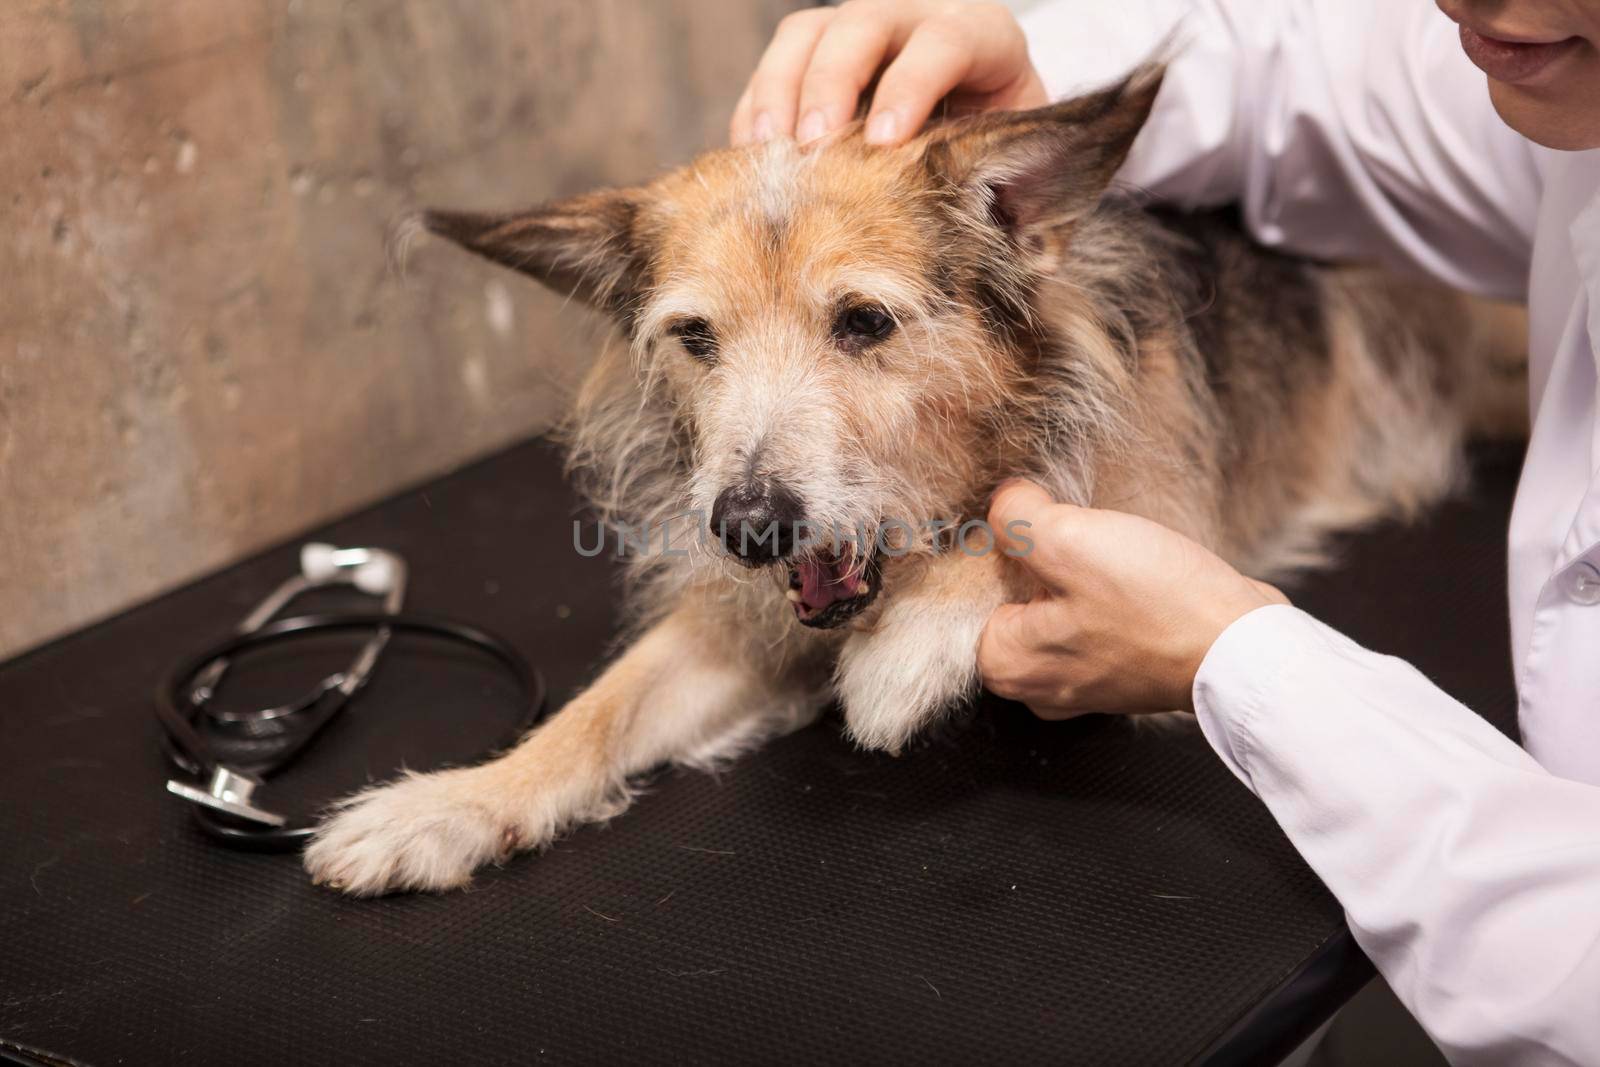 Cute mixed breed dog yawning during vet examination at the clinic